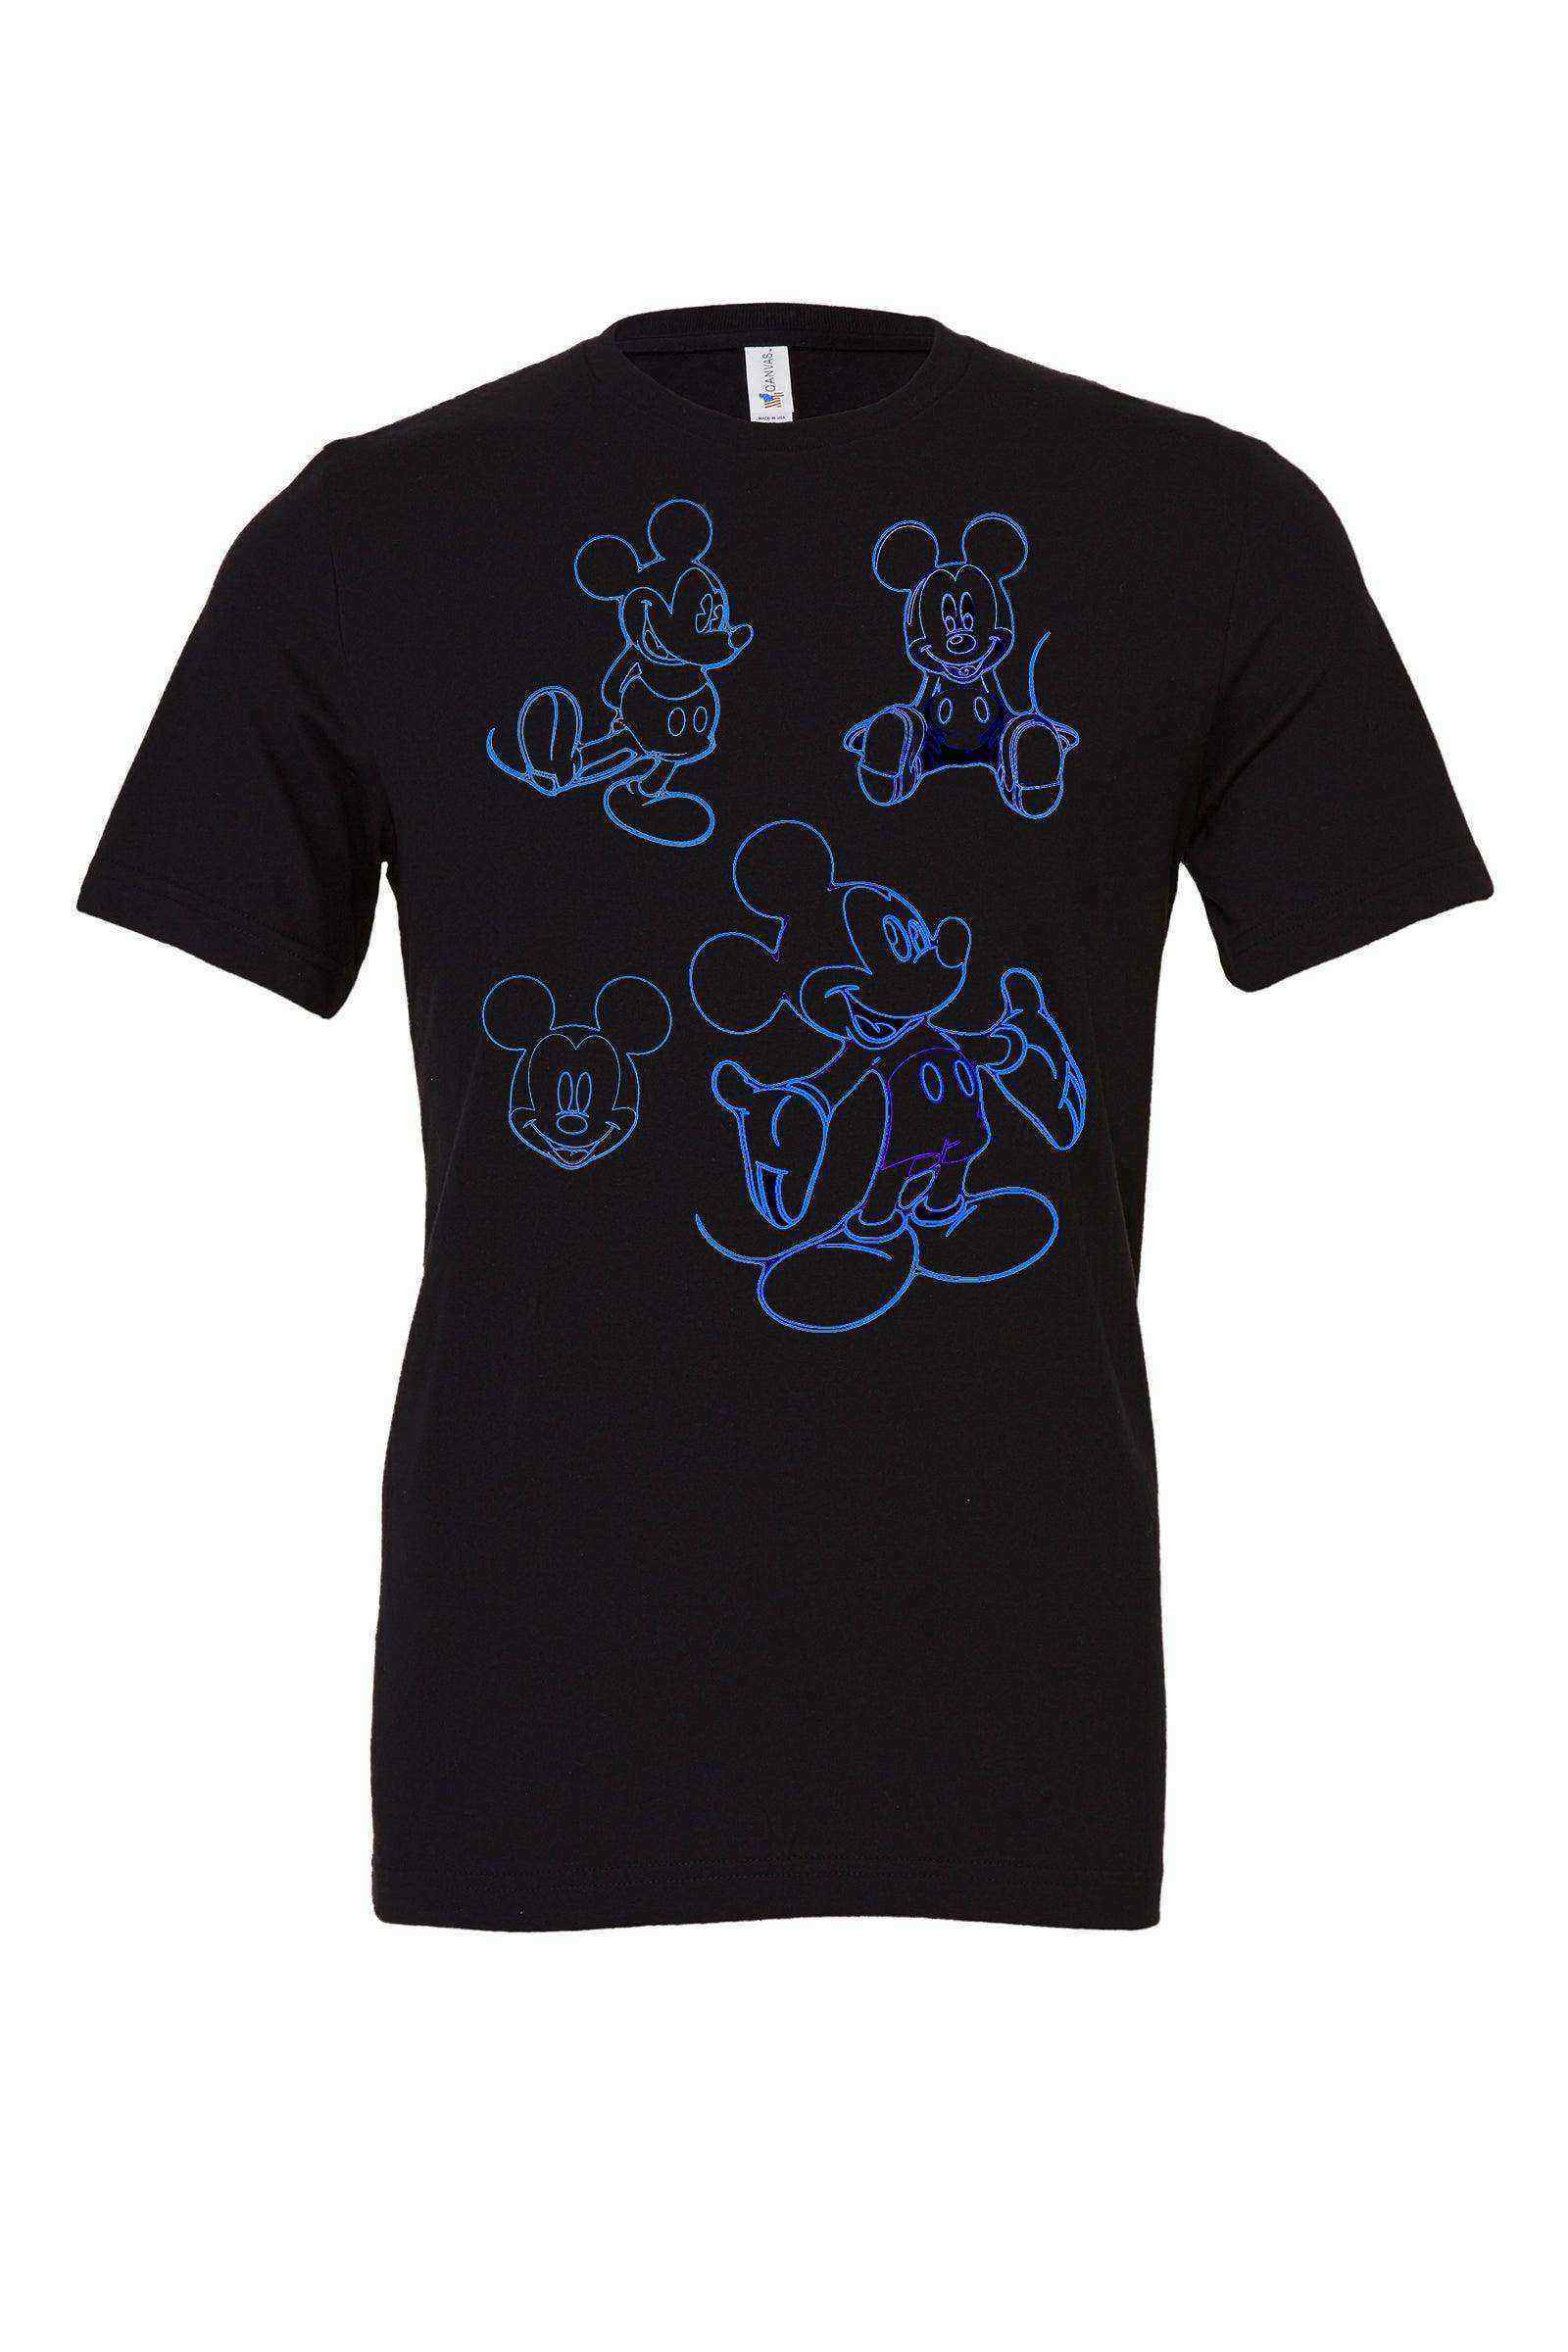 Blue Neon Mickey Shirt | Tron Mickey Shirt | Tomorrowland Mickeys Shirt - Dylan's Tees